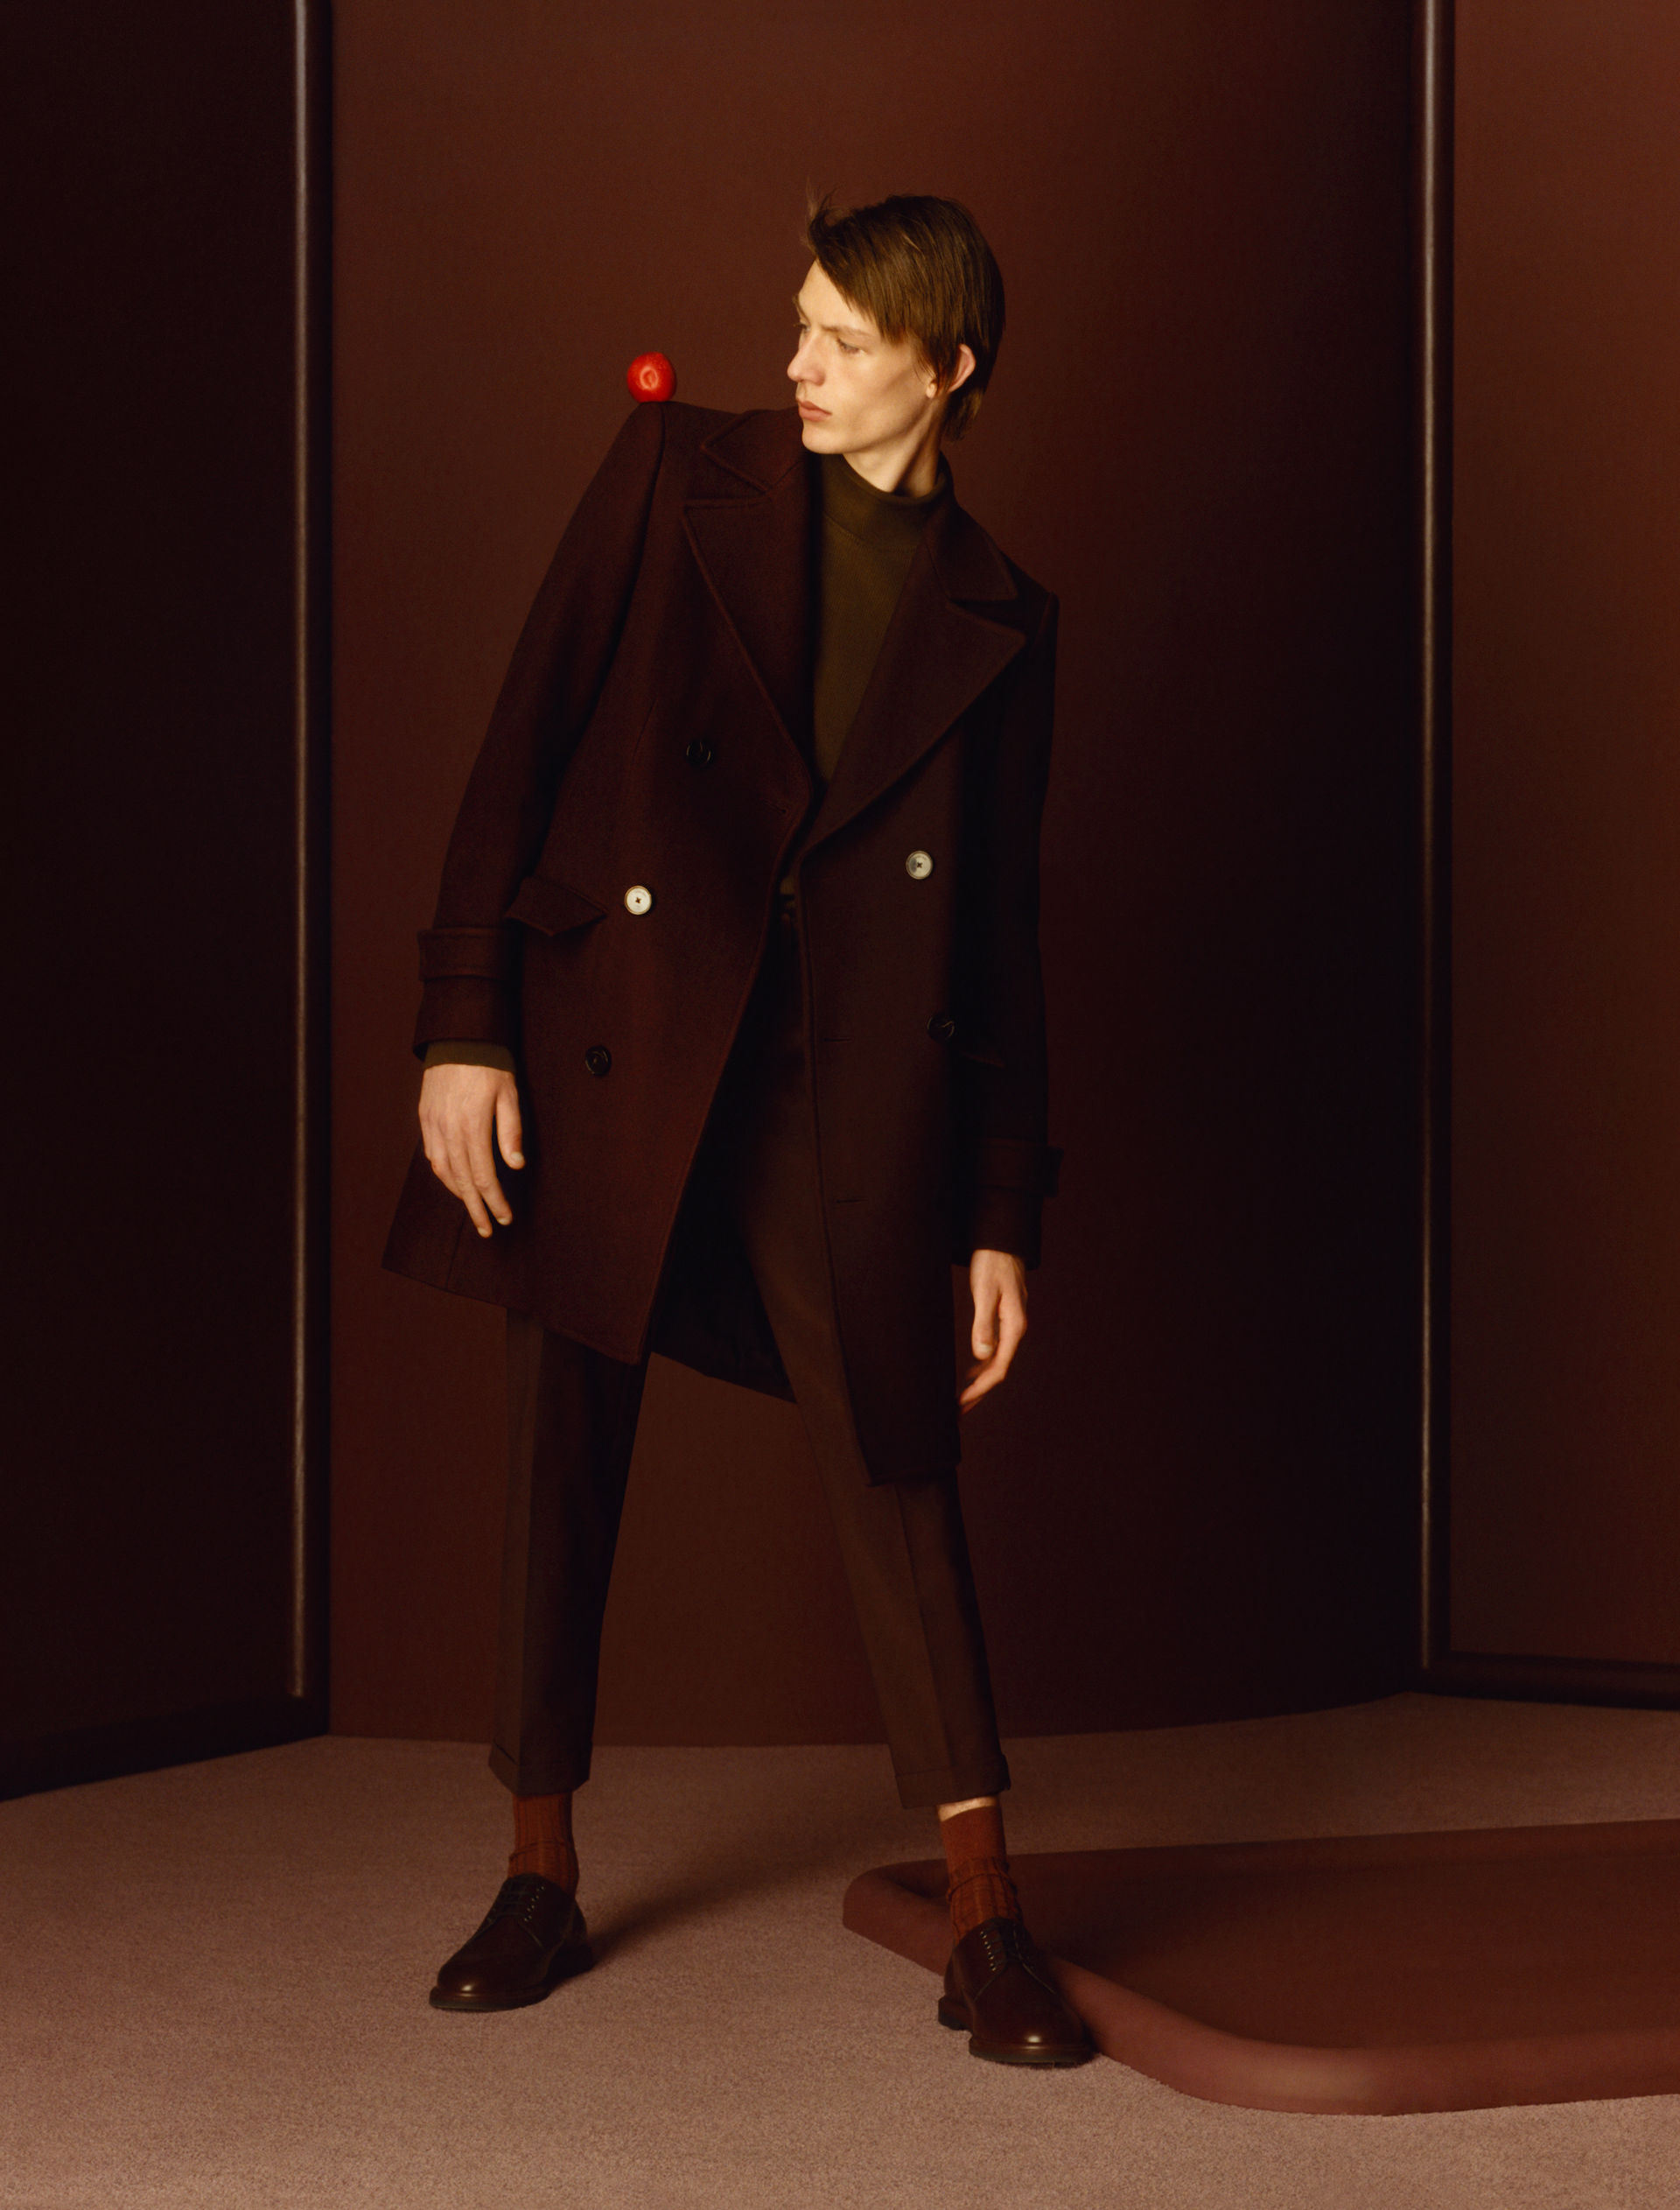 Zara Men Fall Winter 2015 Campaign 007 Zara FallWinter 2015 Menswear ...